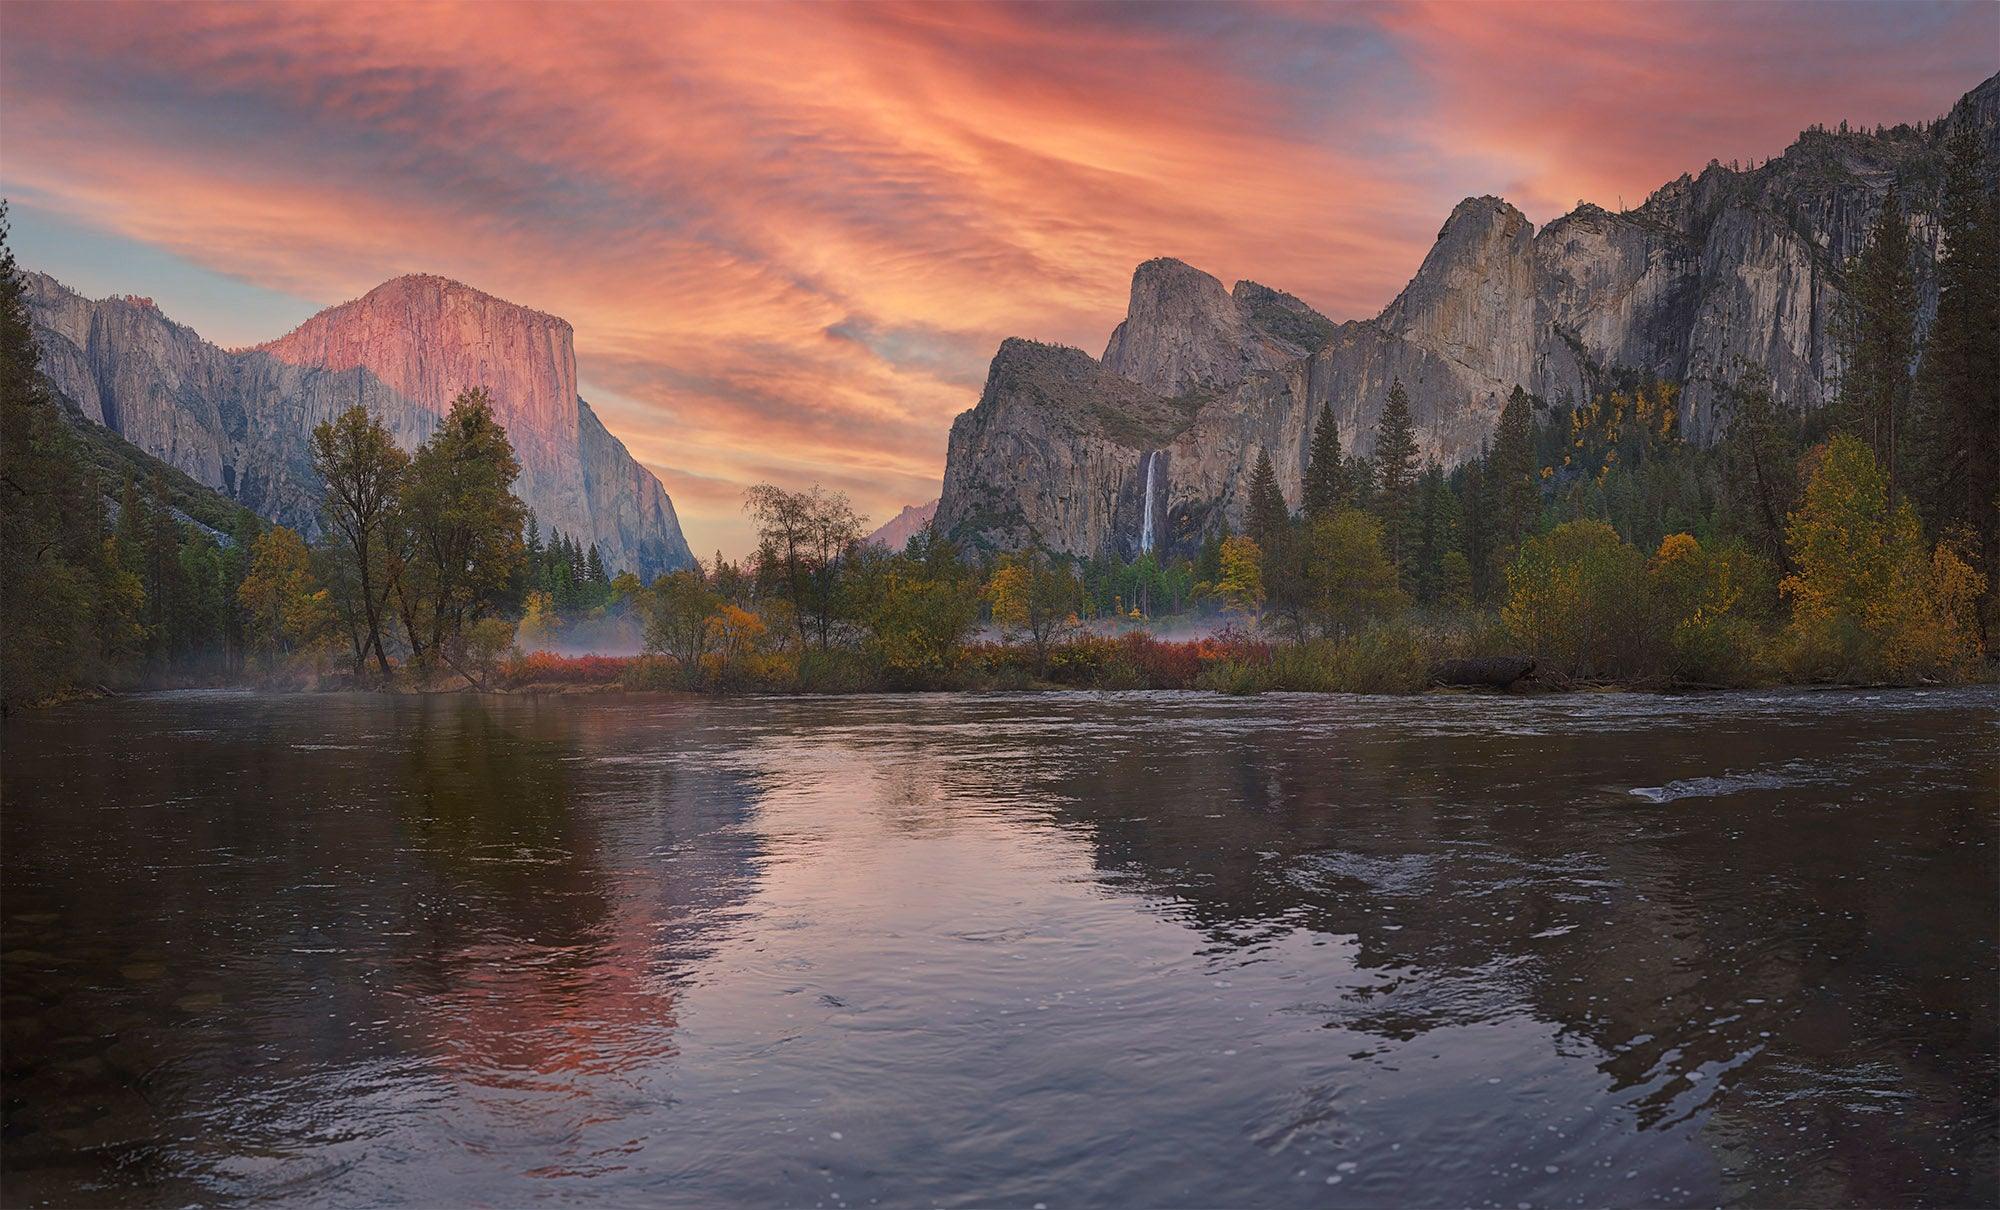 Yosemite El Capitan Sunset over the river image, High resolution GigaPixel Image